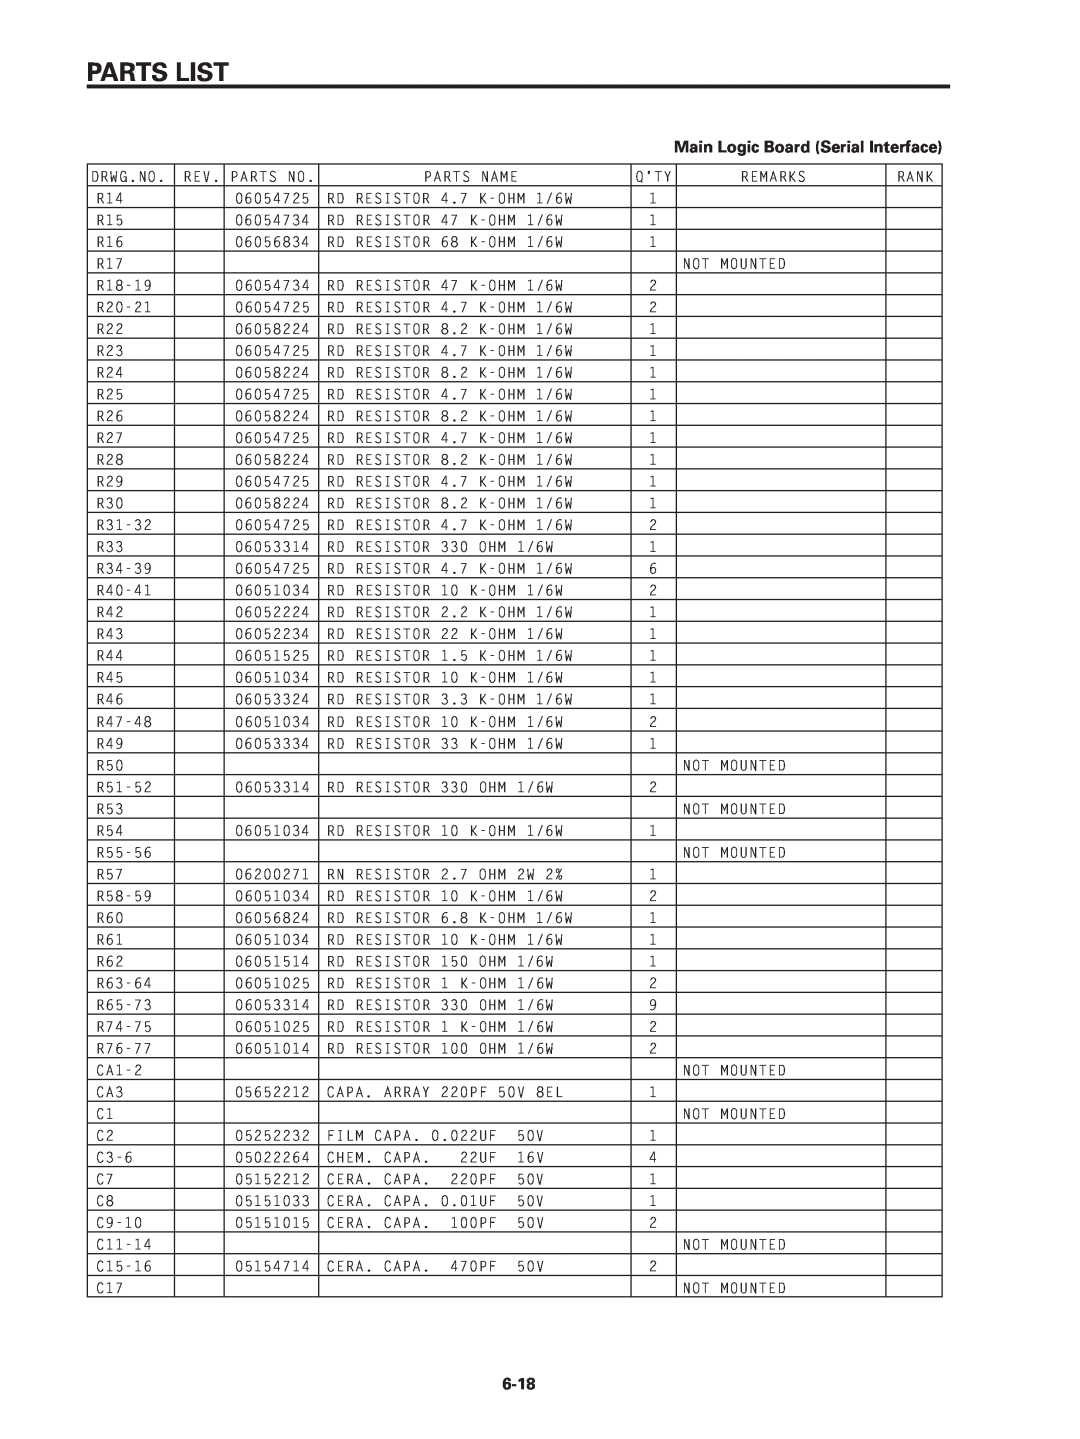 Star Micronics SP320S technical manual Parts List, Main Logic Board Serial Interface, 6-18 